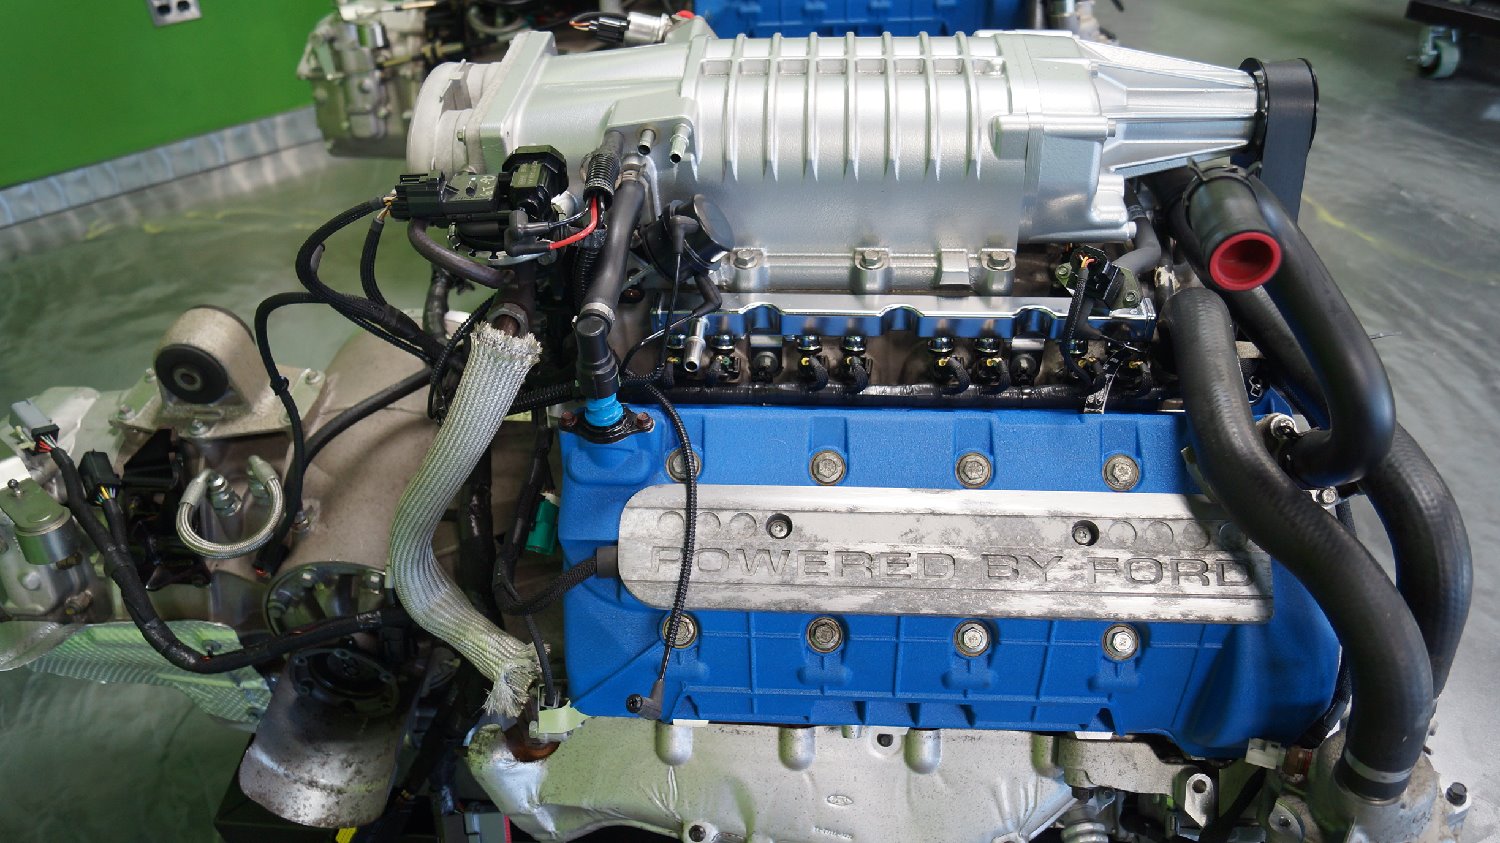 2005 Ford GT 40 Super Car Engine